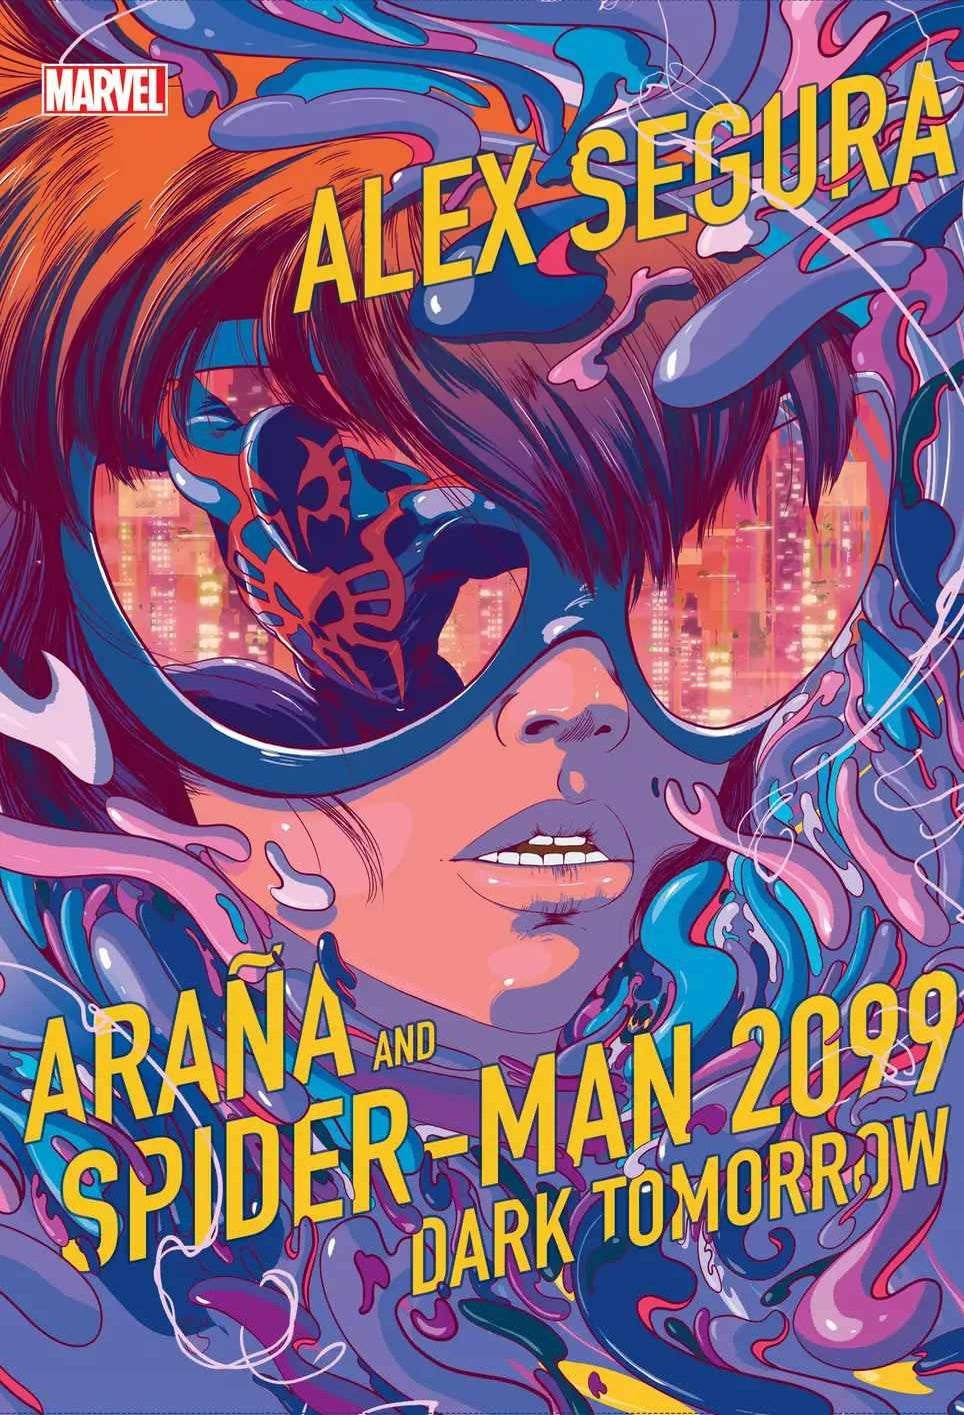 arana-and-spider-man-2099-dark-tomorrow-cover.jpg